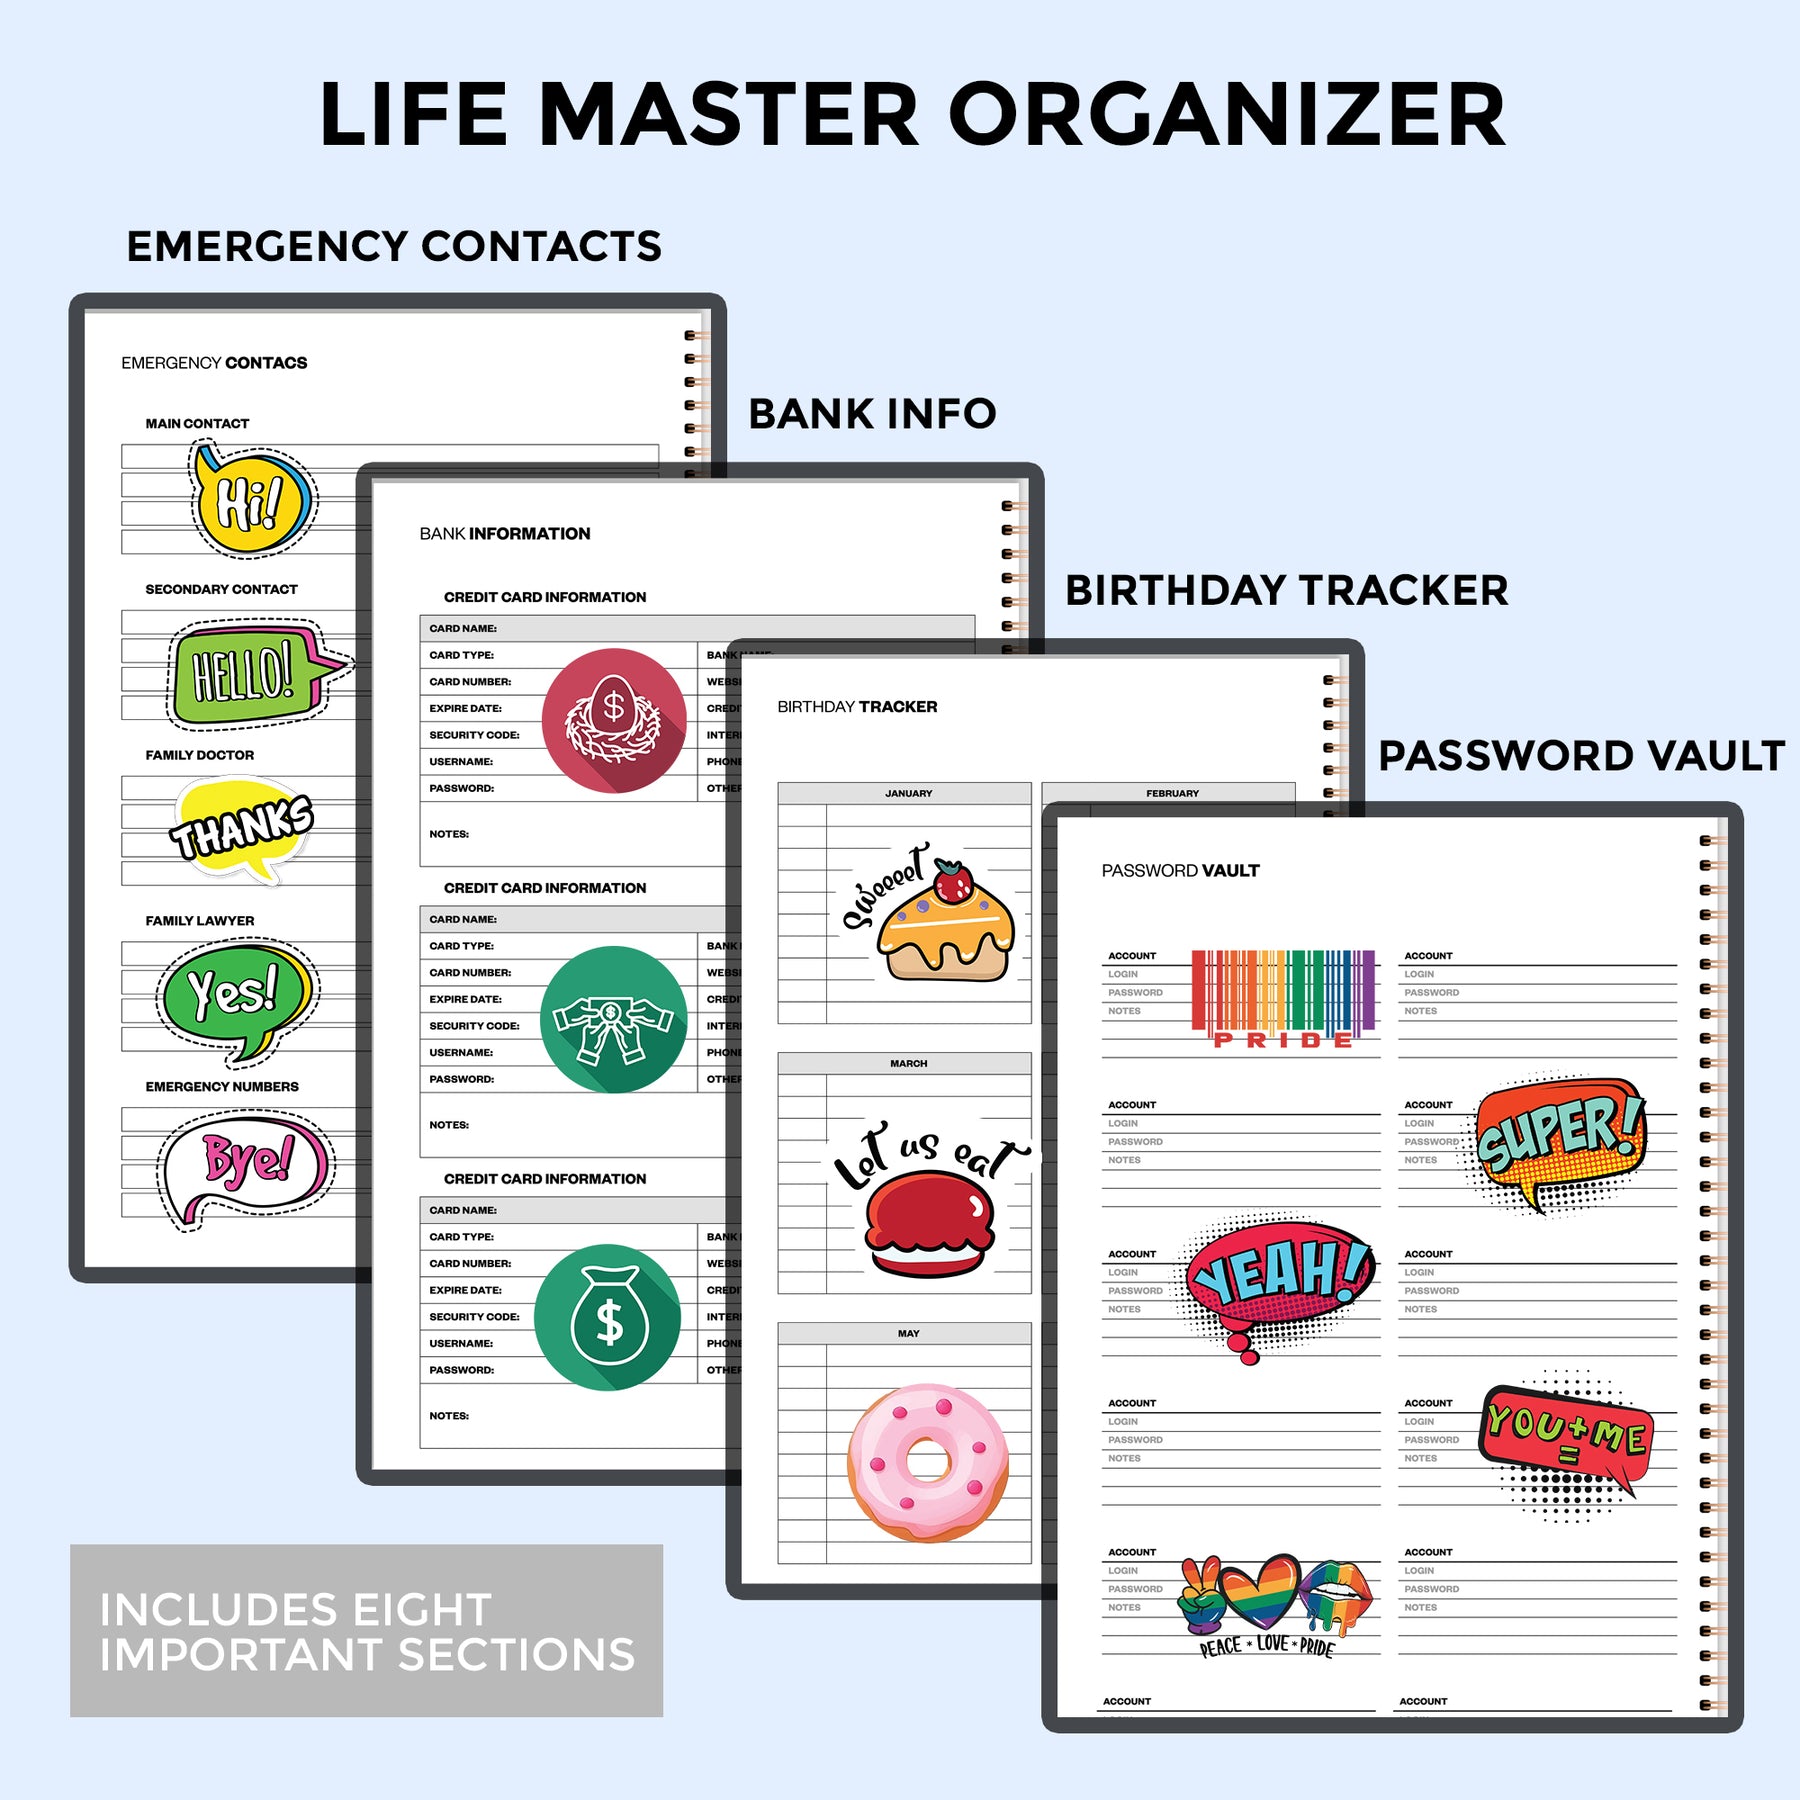 LifeMaster Organizer